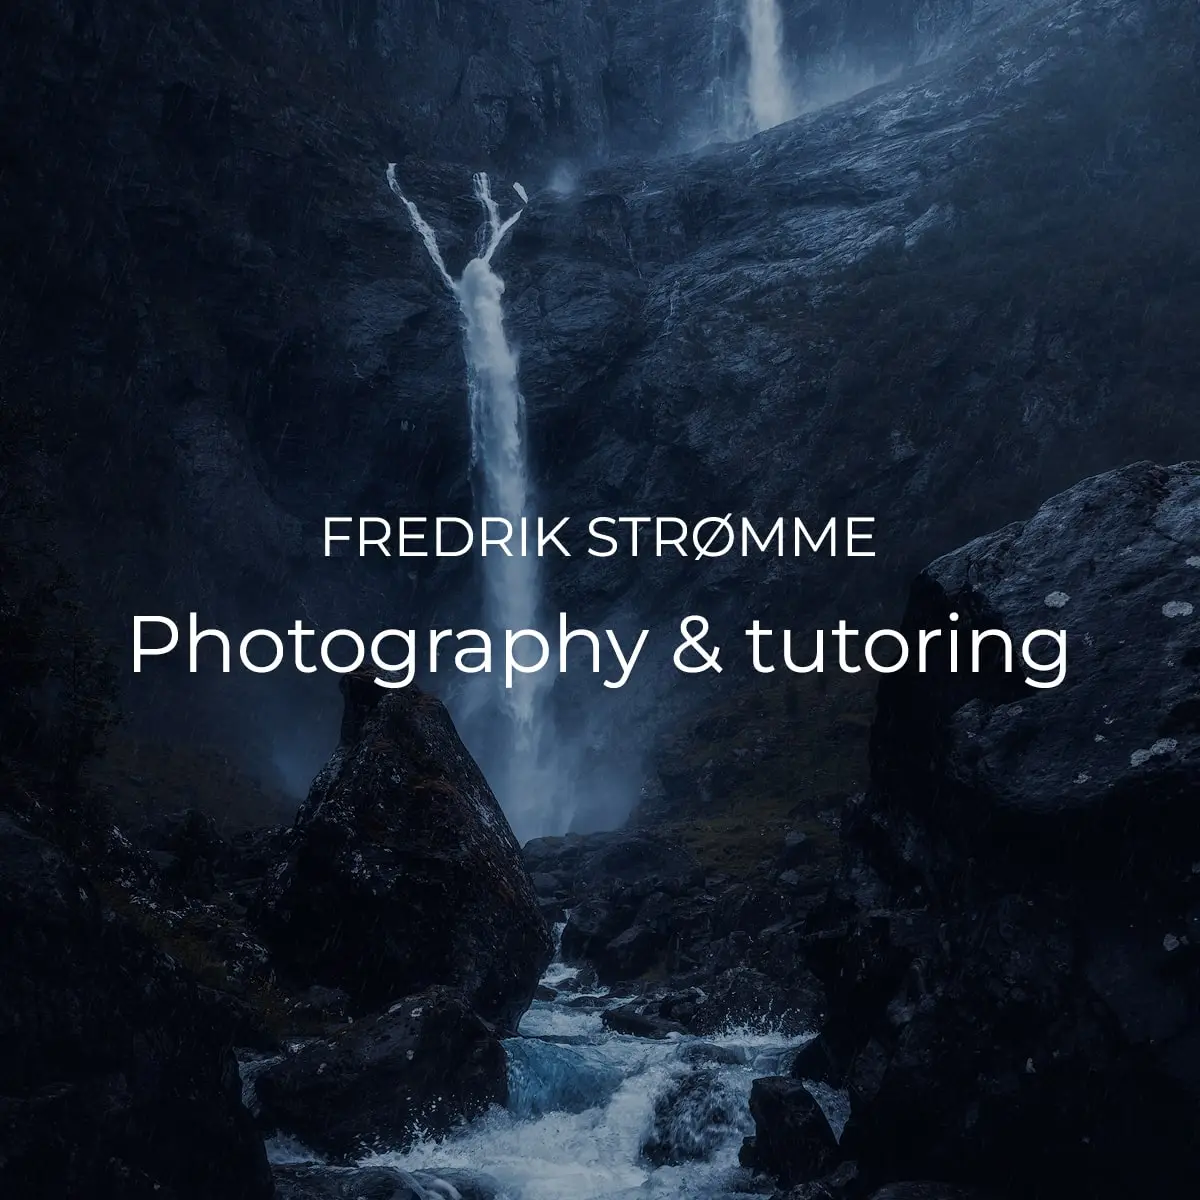 Fredrik Strømme photography and tutorials